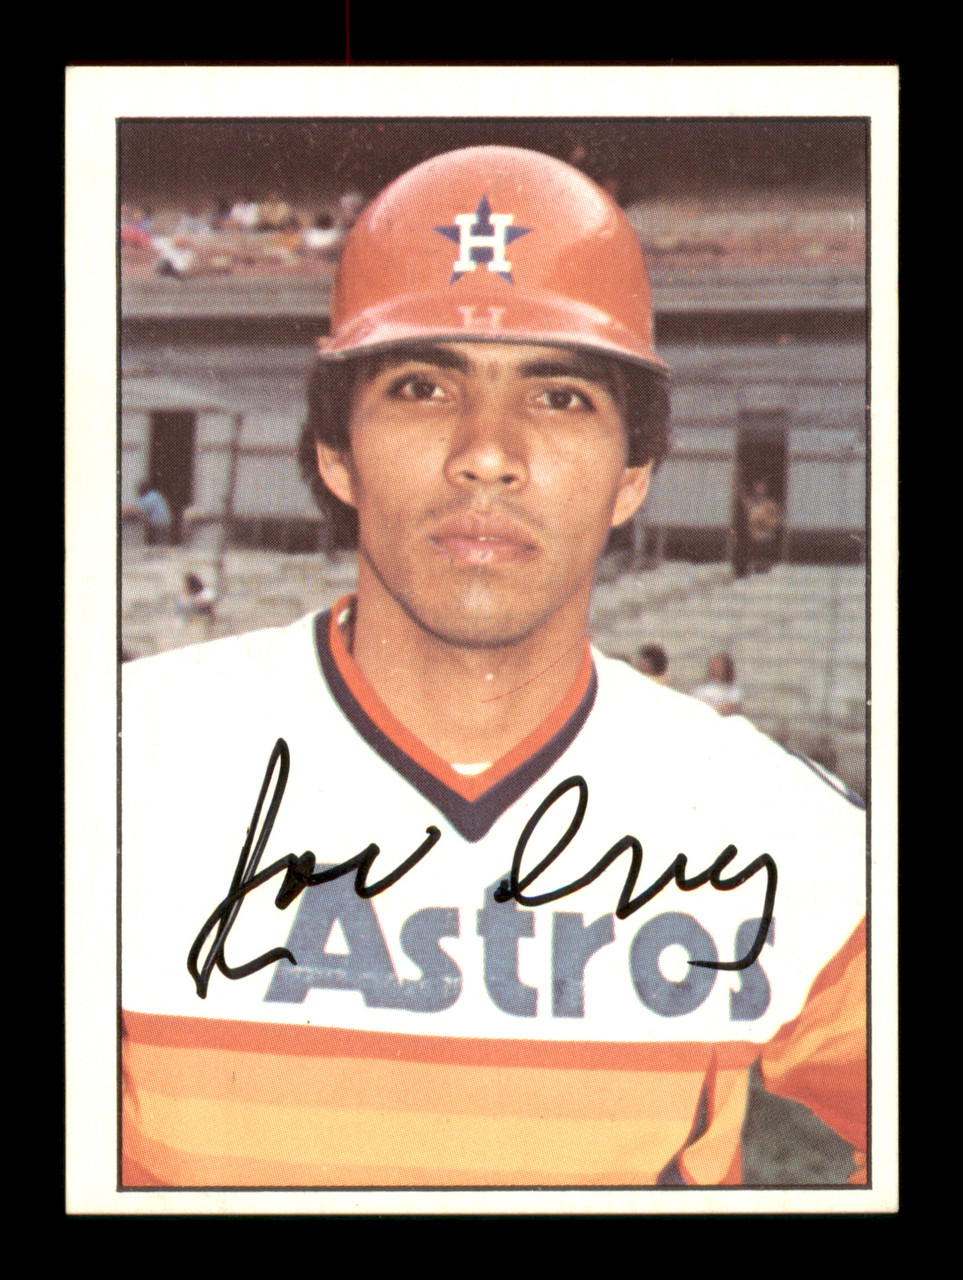 1988 Houston Astros Team Signed Baseball (25 Signatures)., Lot #41193